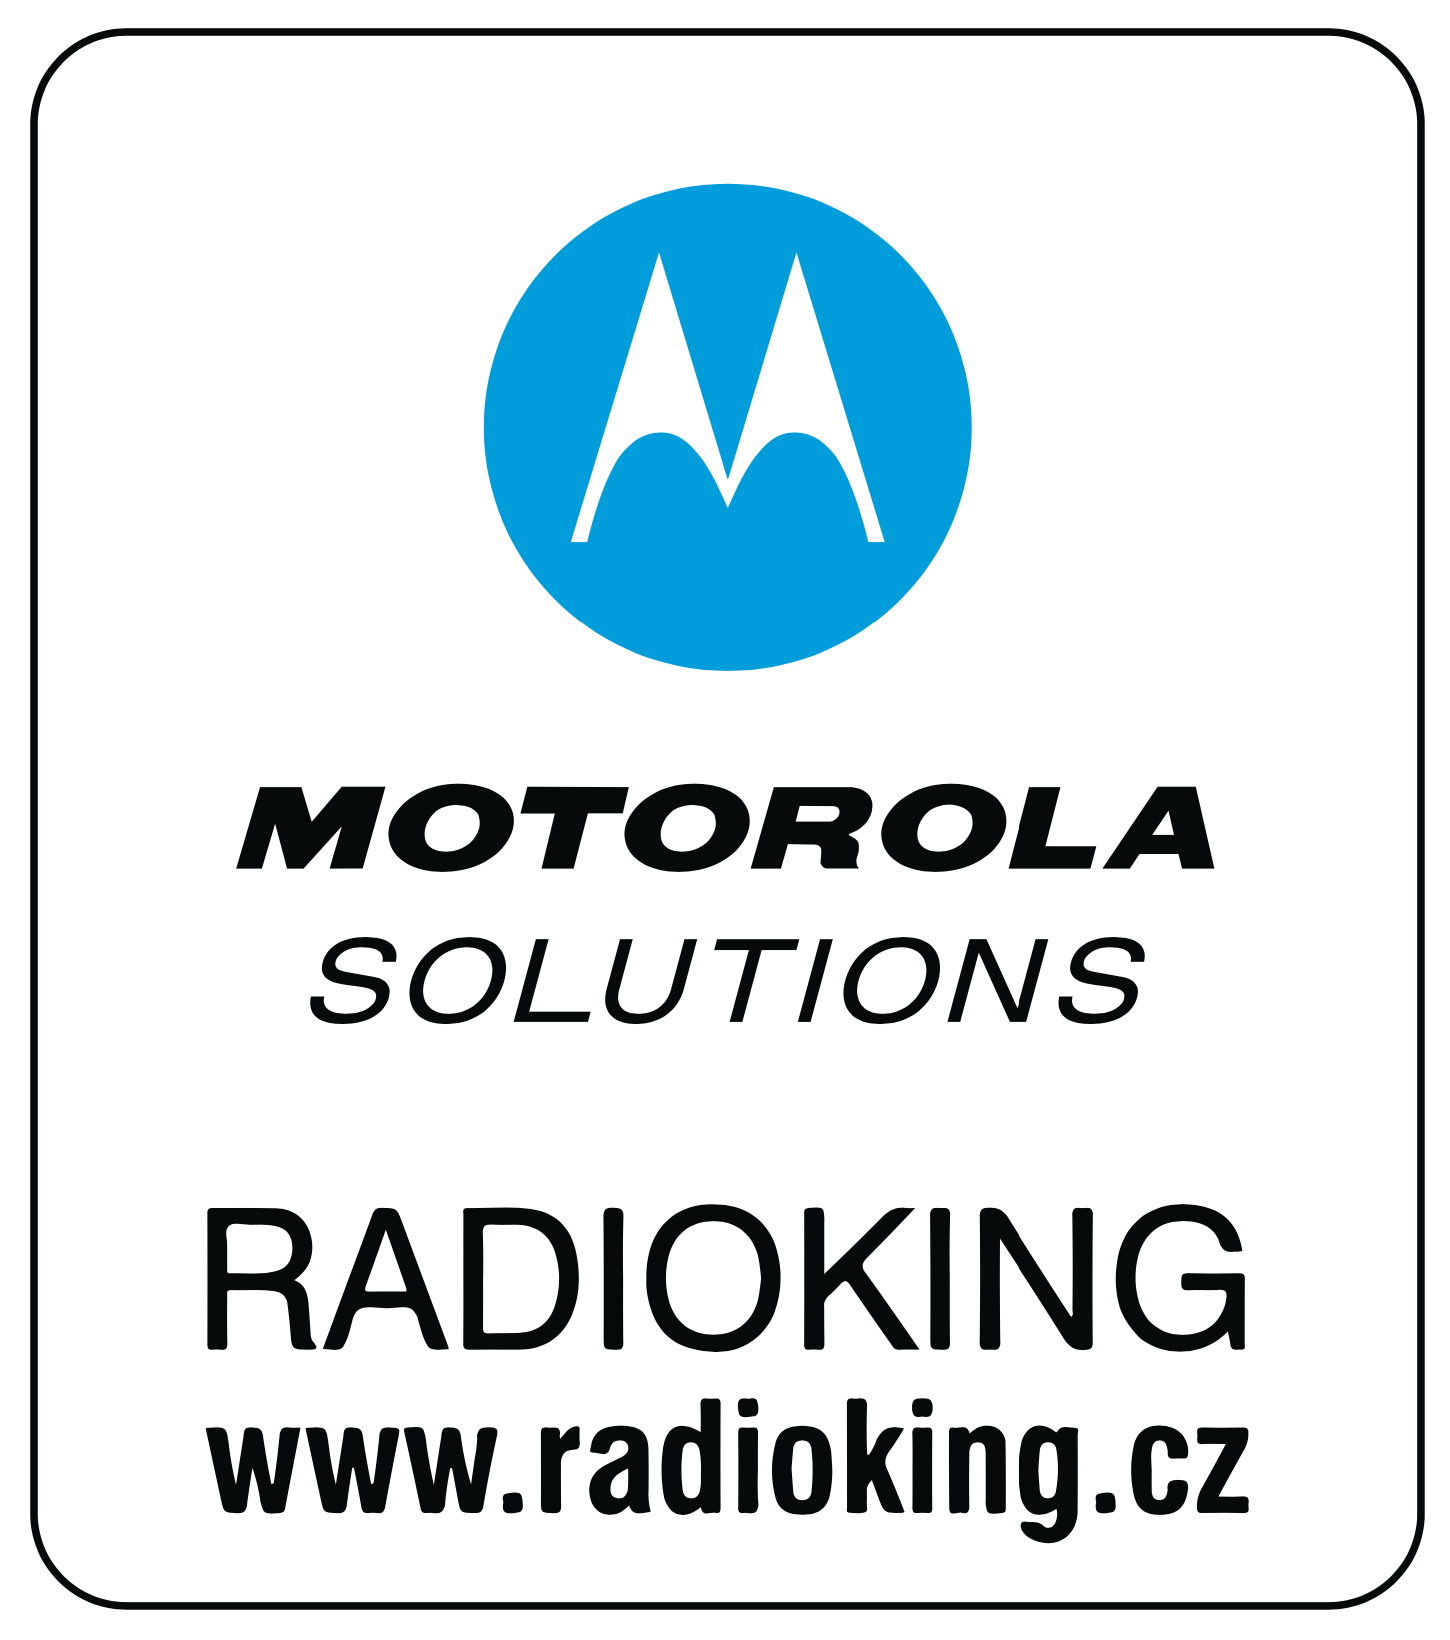 Radioking.cz